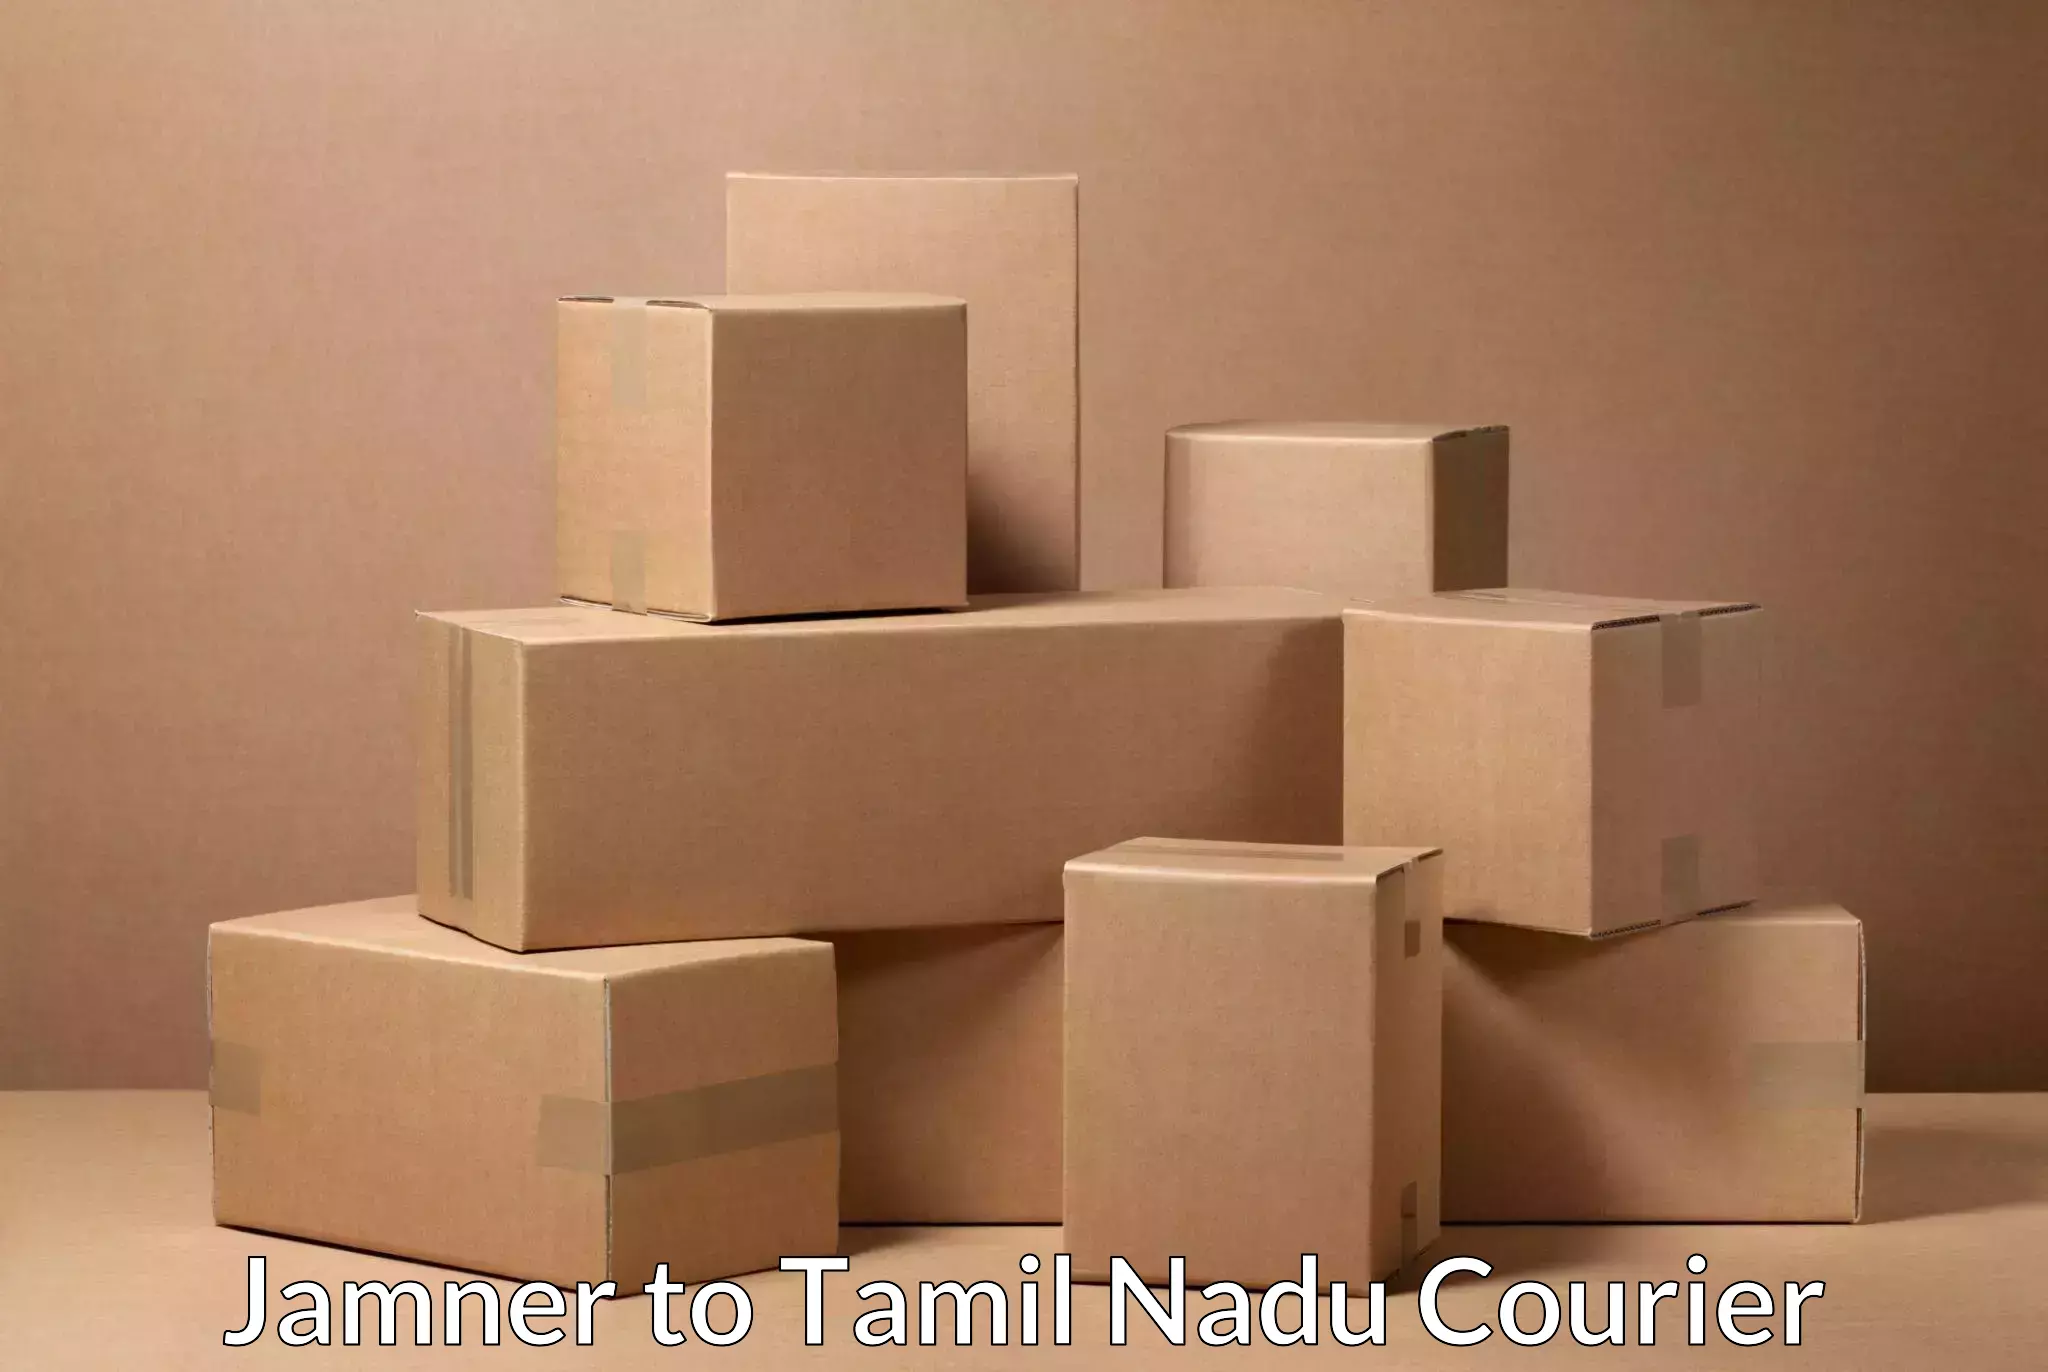 Express postal services Jamner to Tamil Nadu